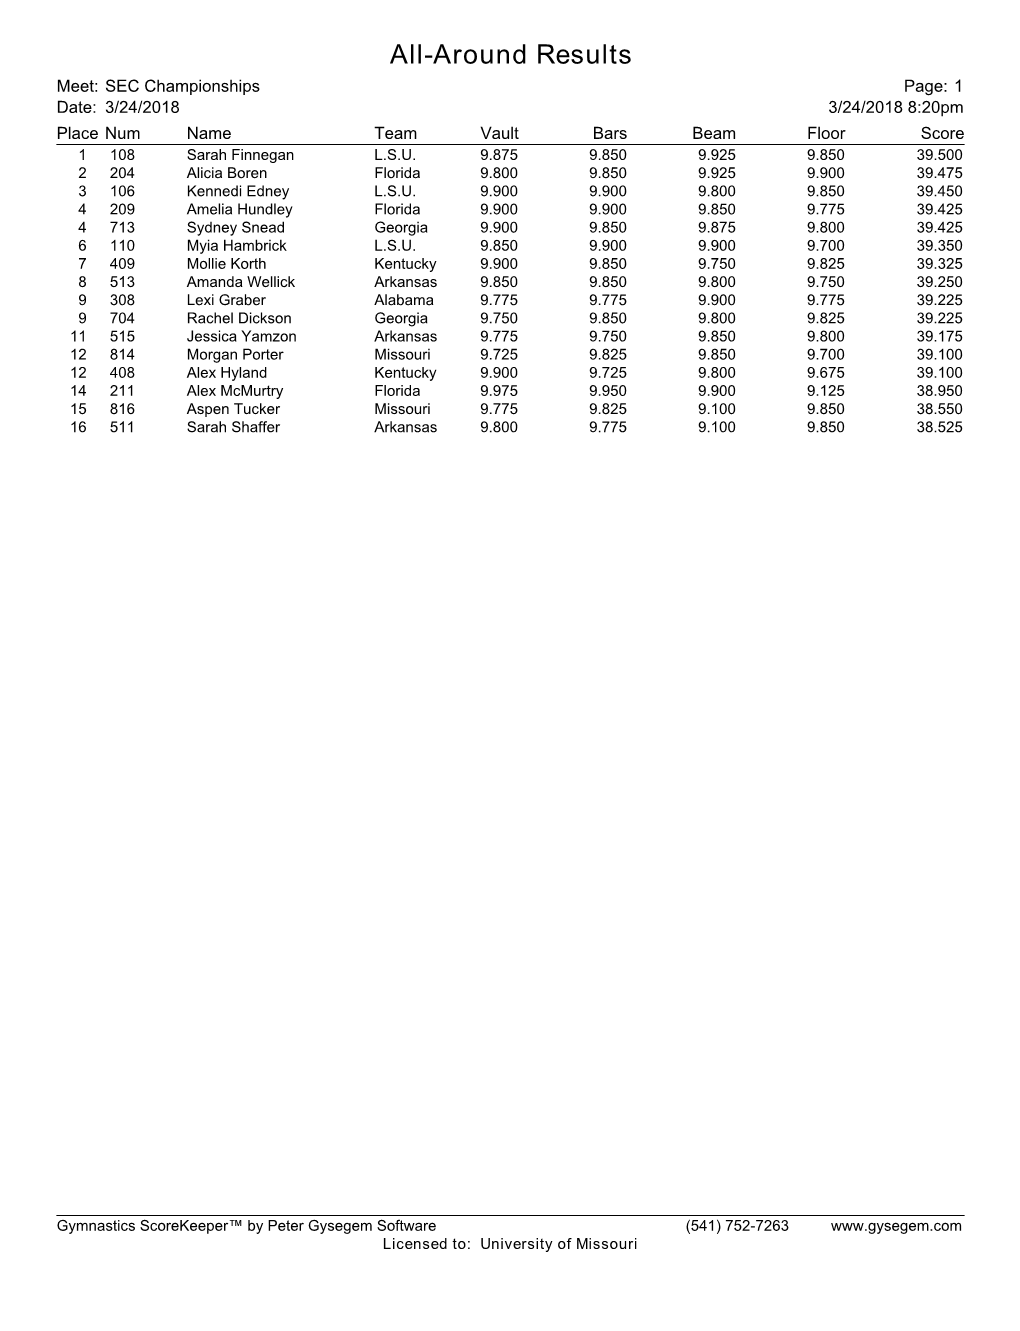 All-Around Results Meet: SEC Championships Page: 1 Date: 3/24/2018 3/24/2018 8:20Pm Place Num Name Team Vault Bars Beam Floor Score 1 108 Sarah Finnegan L.S.U